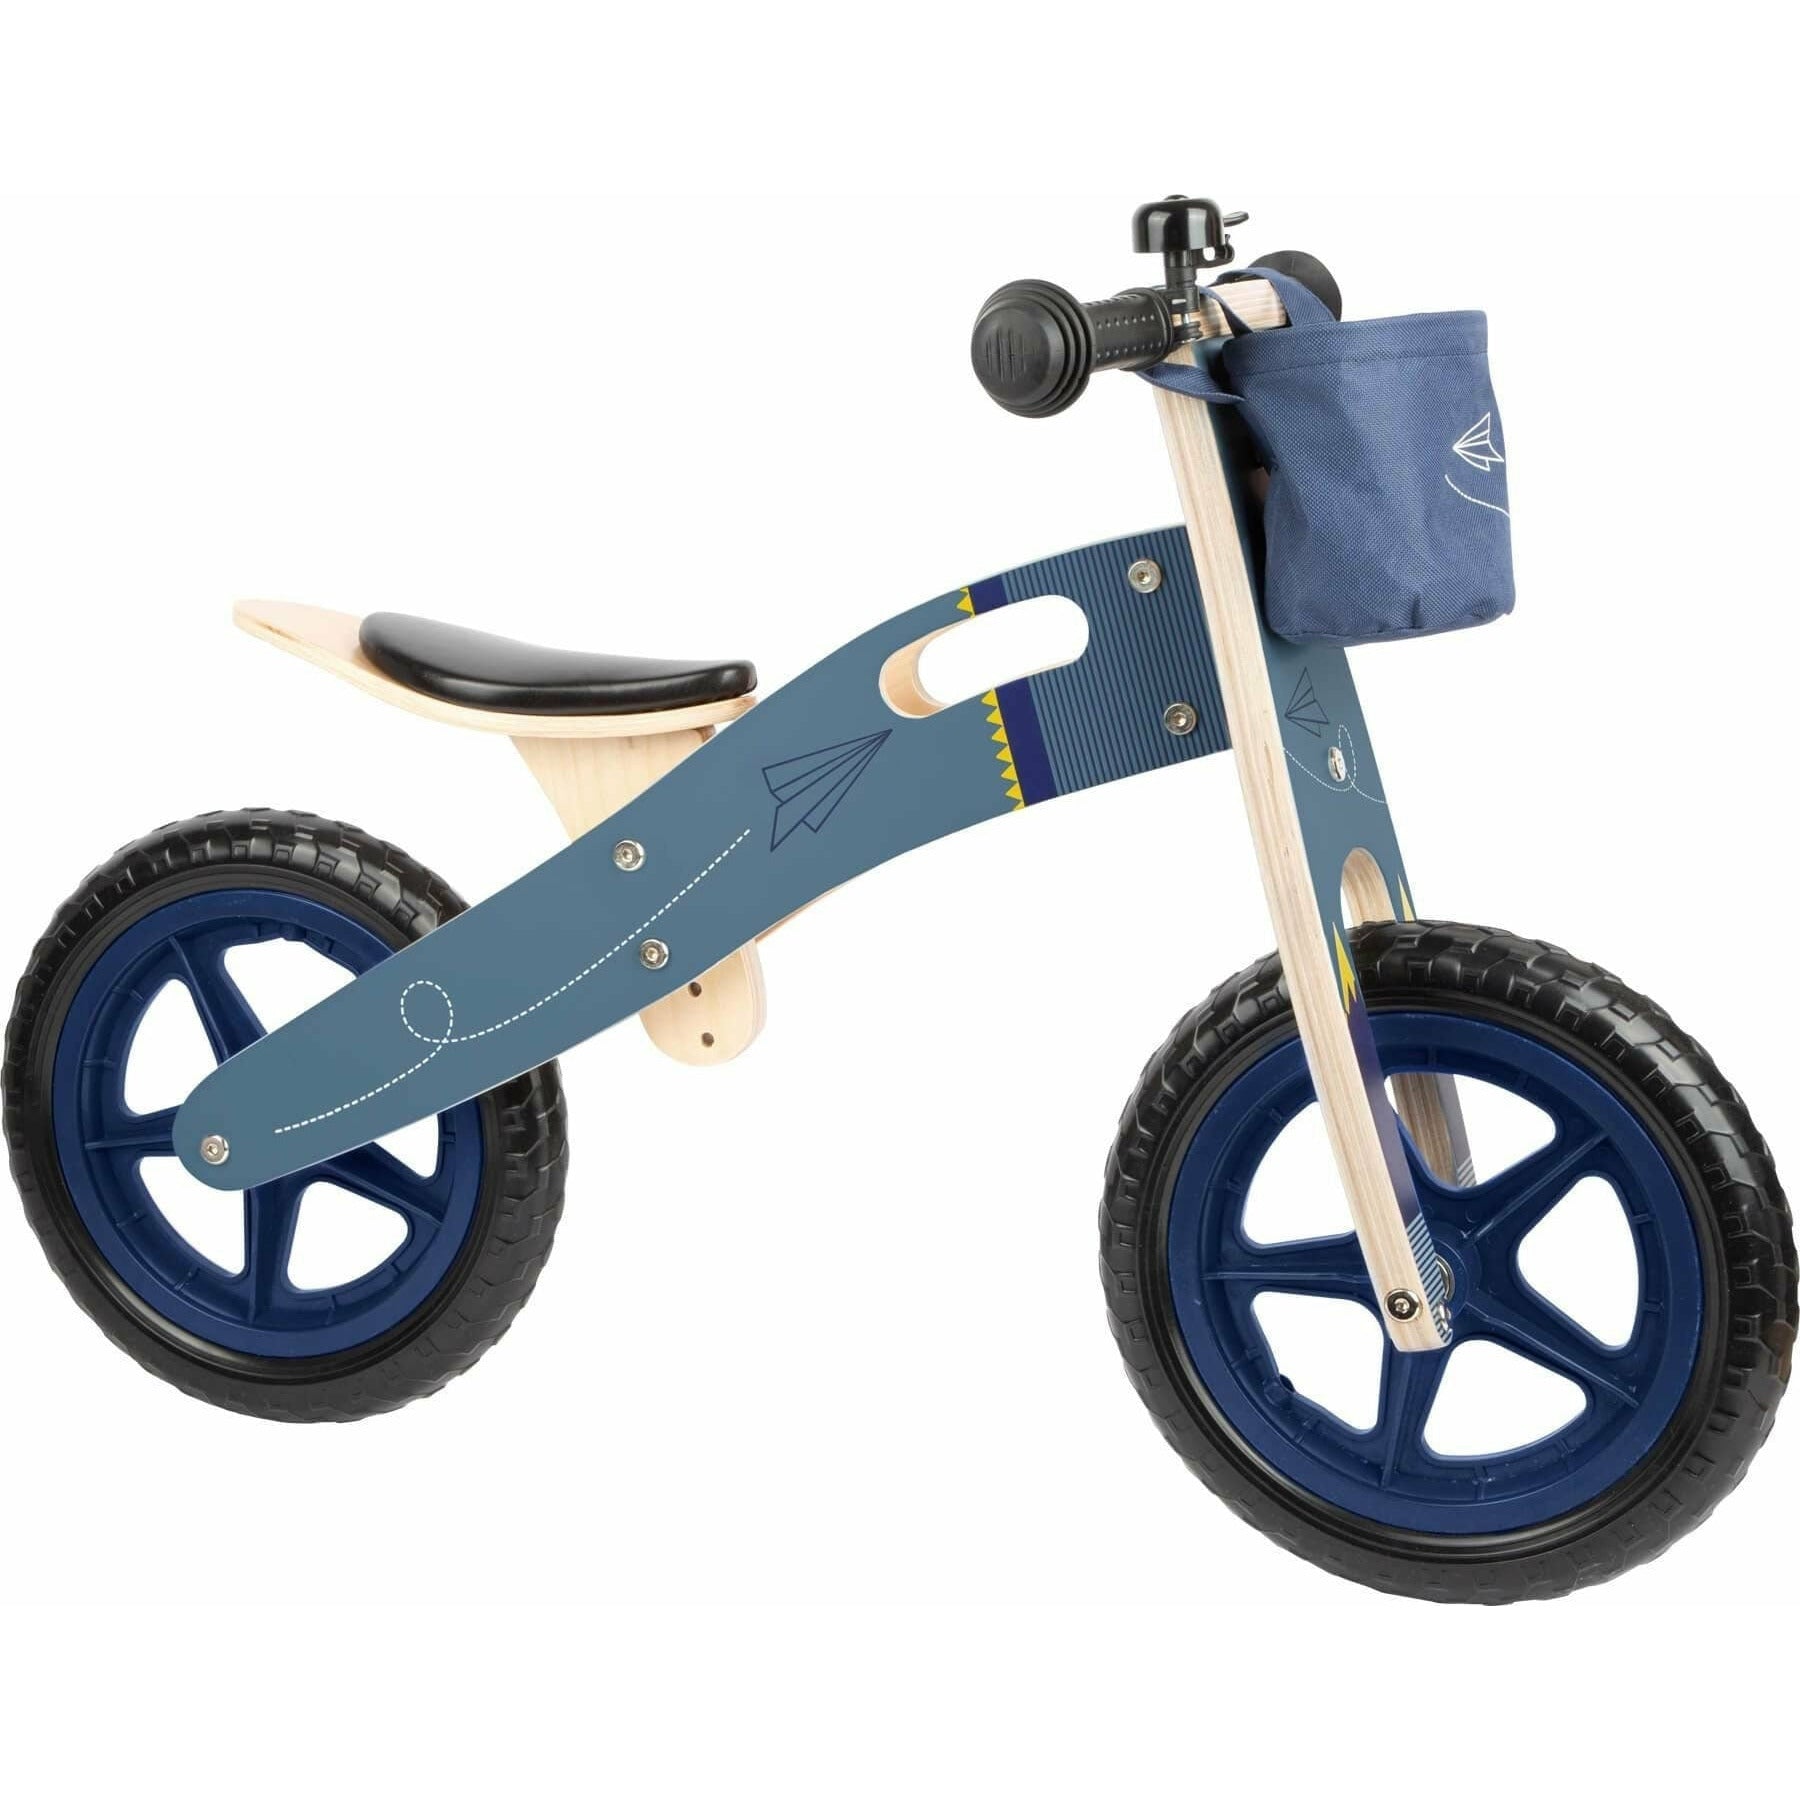 Personalisiertes Laufrad Blau,(Name incl.) Kinder Rad, Holz Laufrad, Roller für Kinder Kinderspielzeug Tragegurt